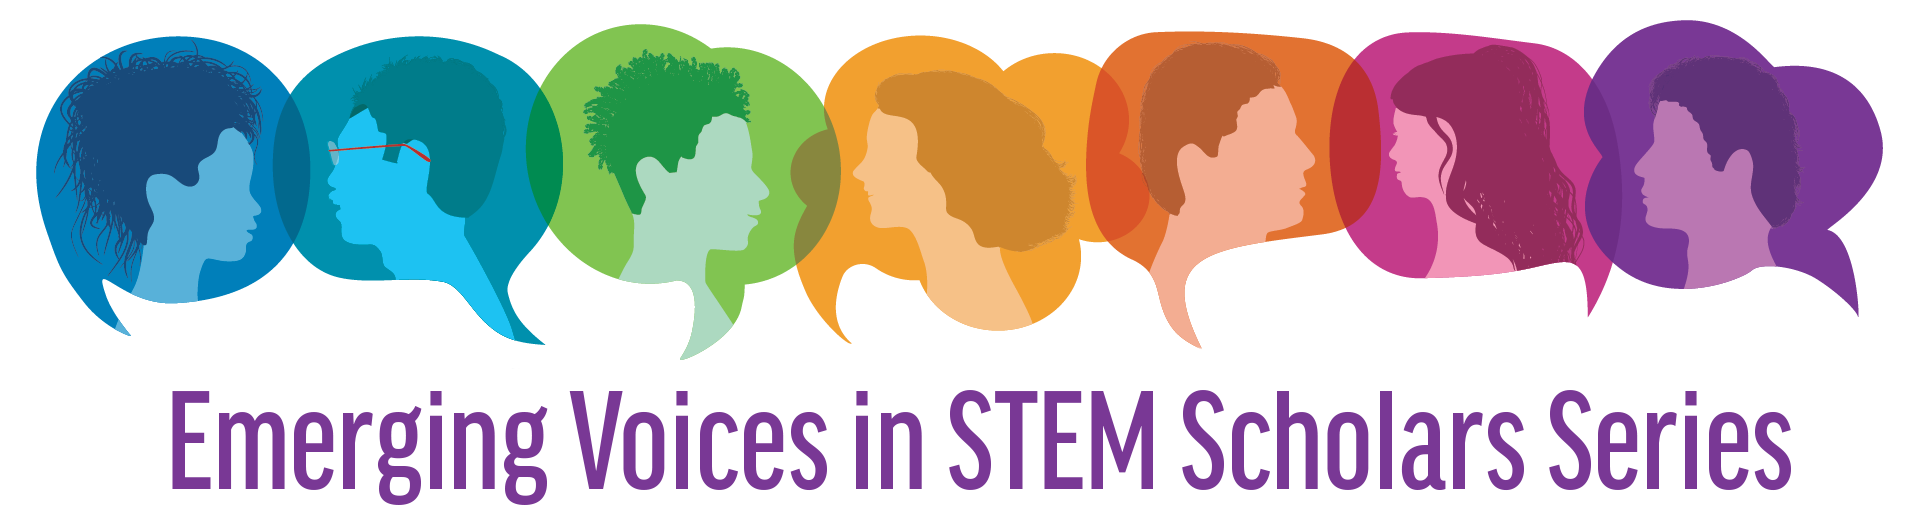 Emerging Voices in STEM Scholars Series